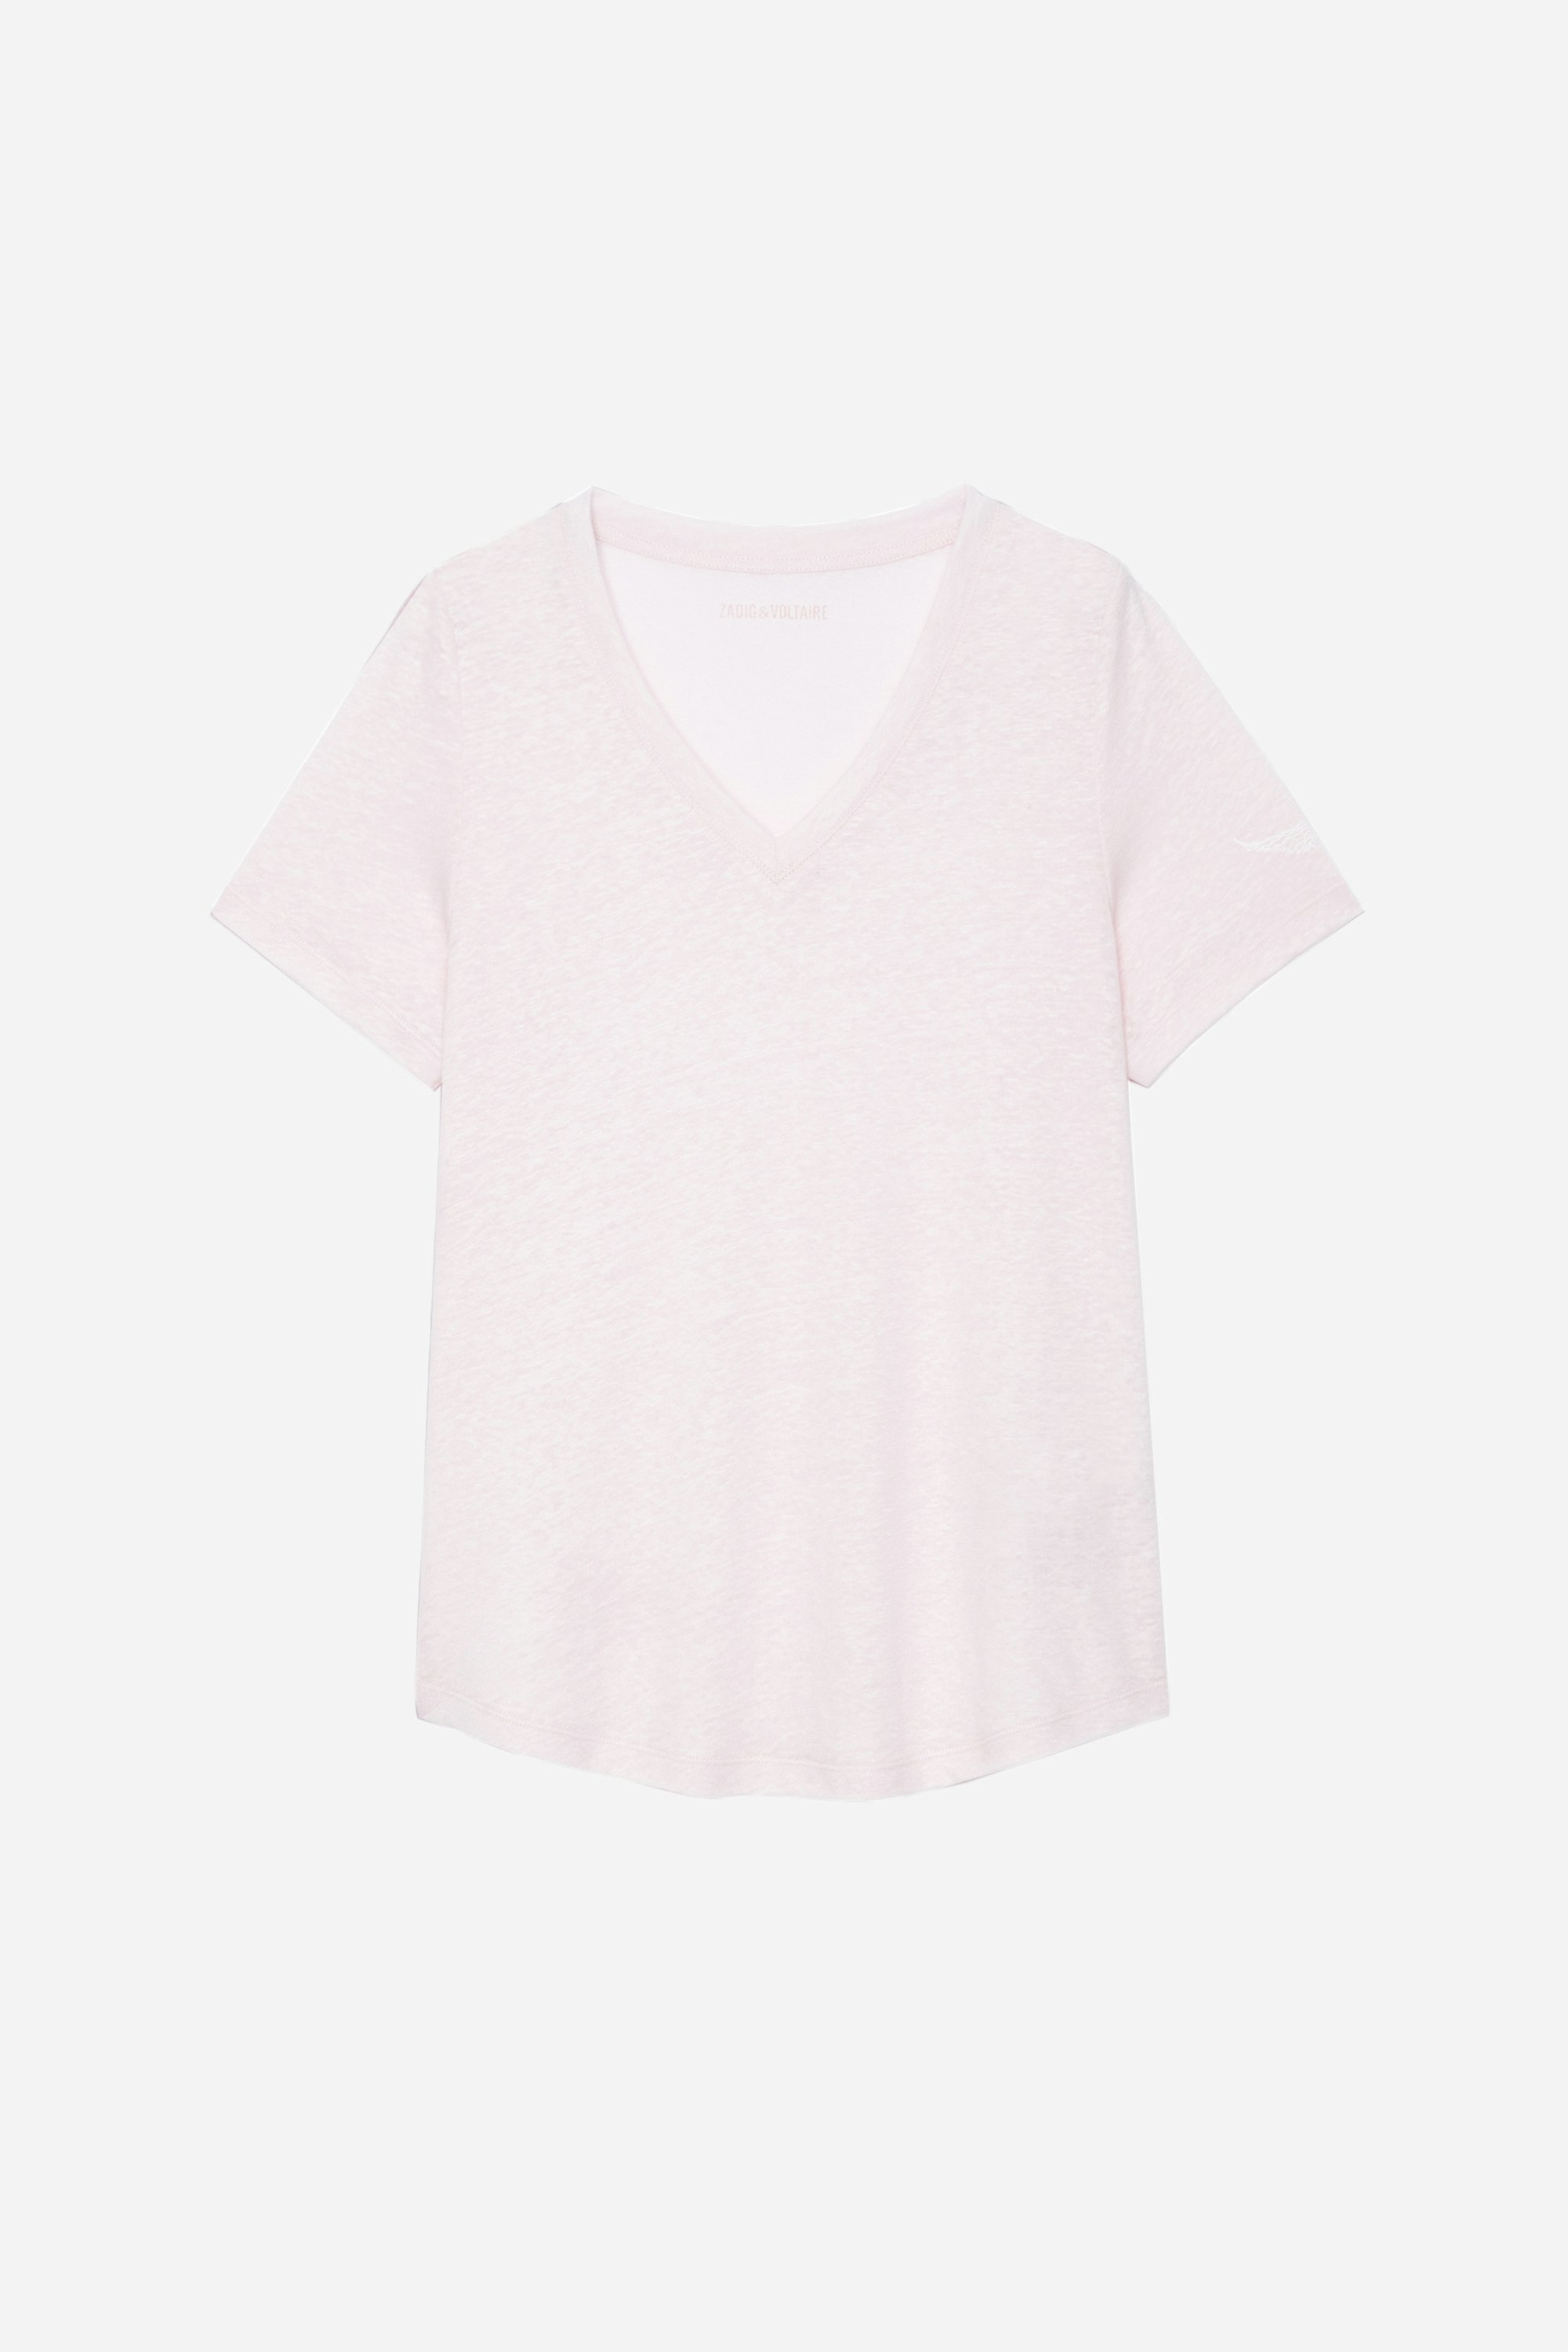 Atia Wings Linen T-shirt - Women’s light pink linen T-shirt with wings motif on the left sleeve.